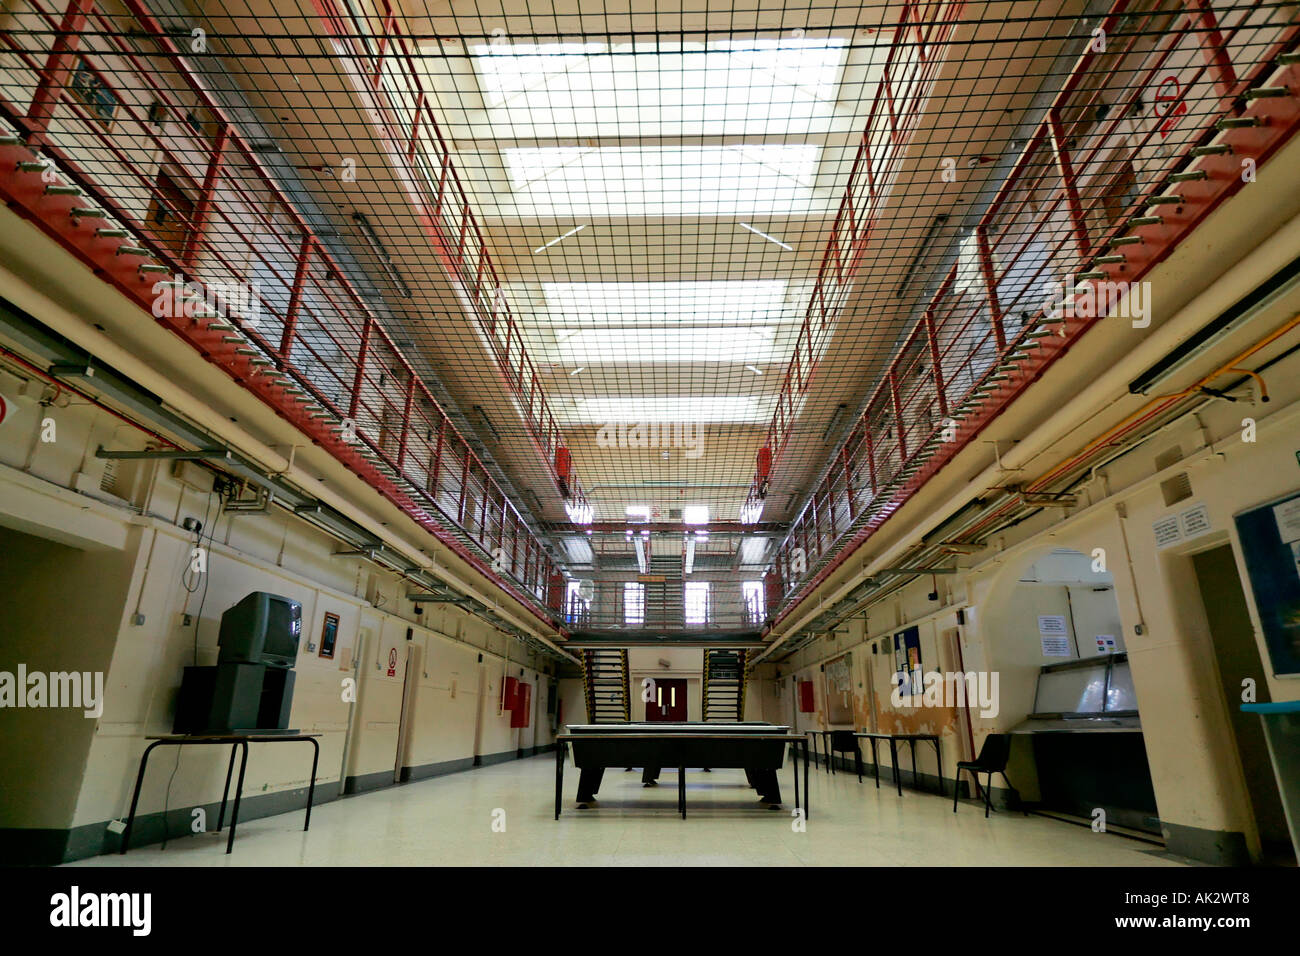 Interior of a prison cell block. Stock Photo